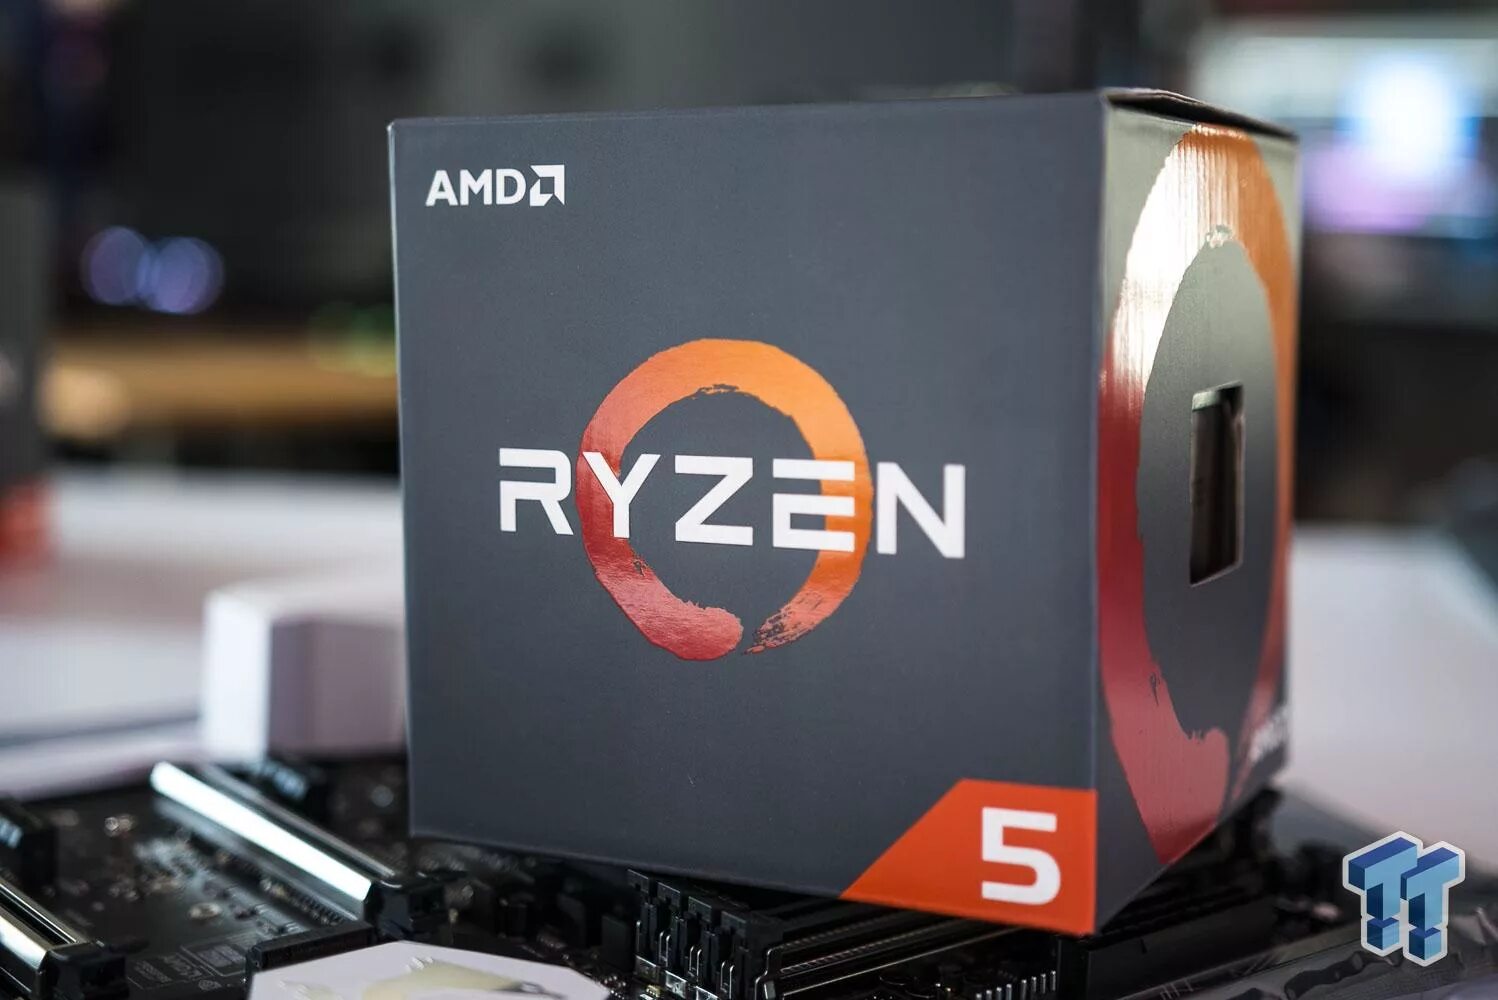 5 1600 купить. AMD Ryzen 5 1600. AMD Ryzen 5 2600. AMD Ryzen 5 1600 (Box). Процессор AMD Ryzen 5 1600 (6/12 Cores).